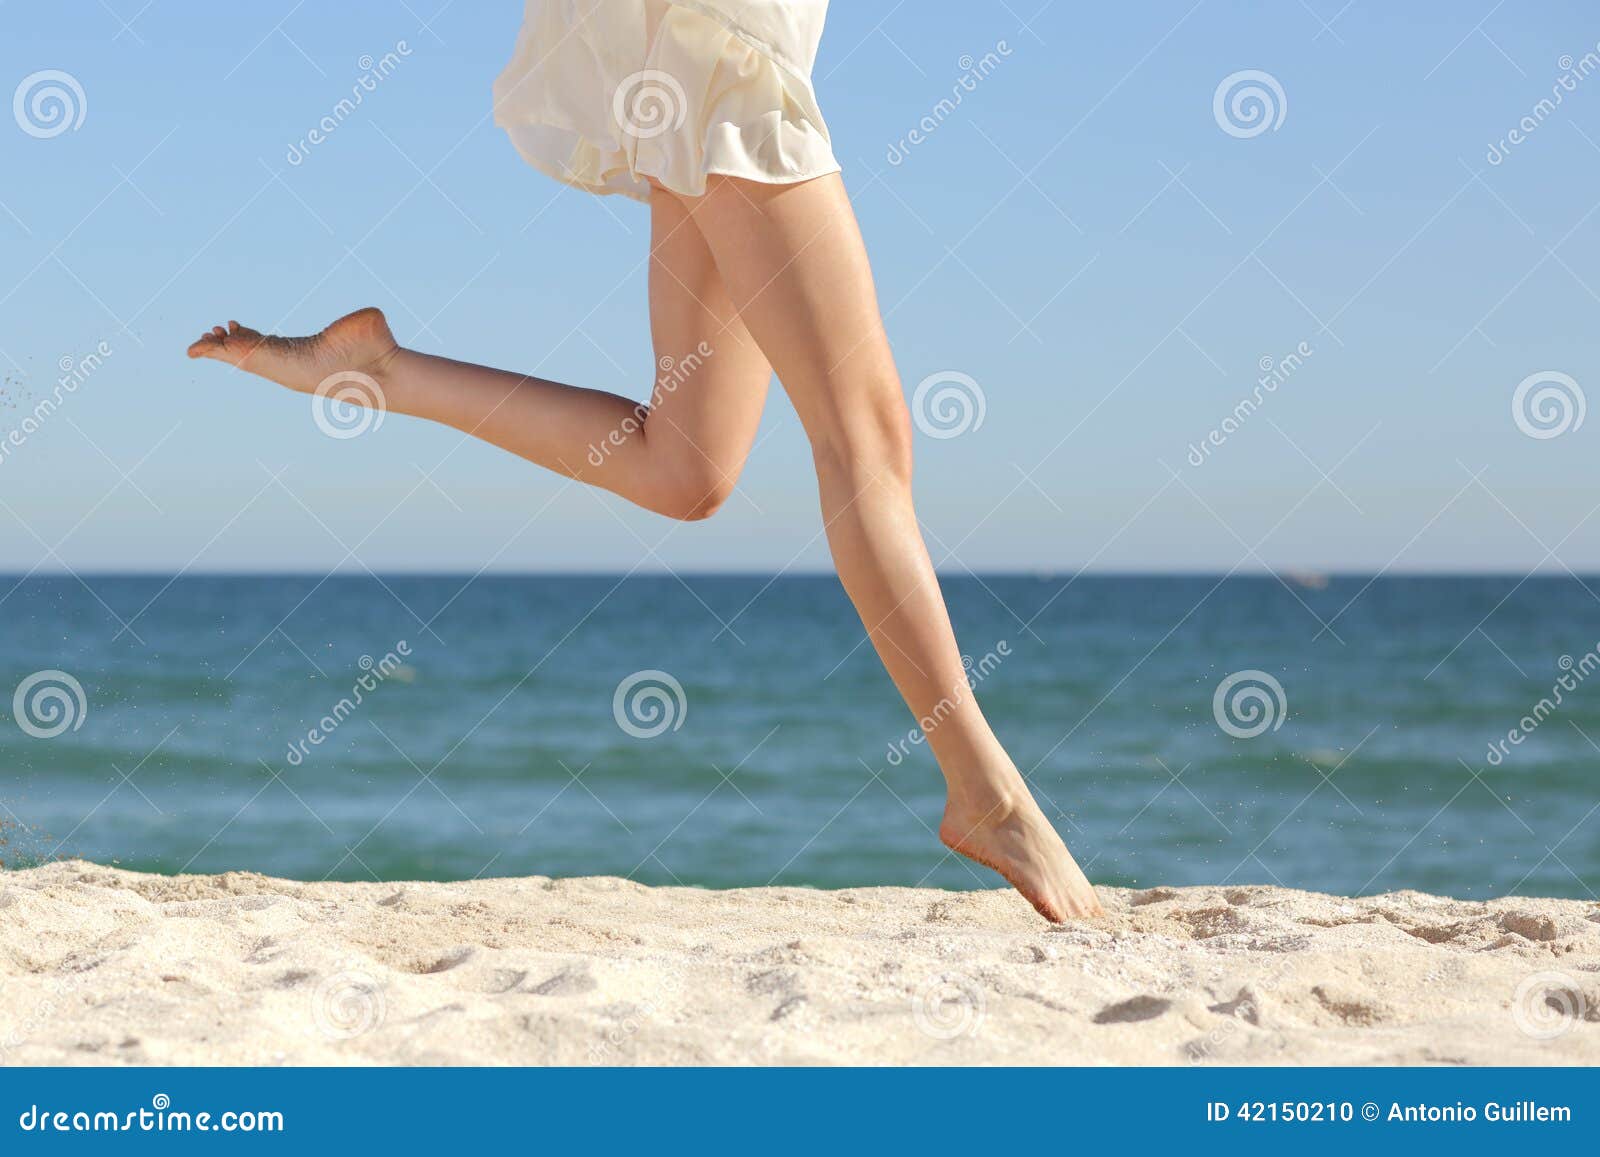 beautiful woman long legs jumping on the beach